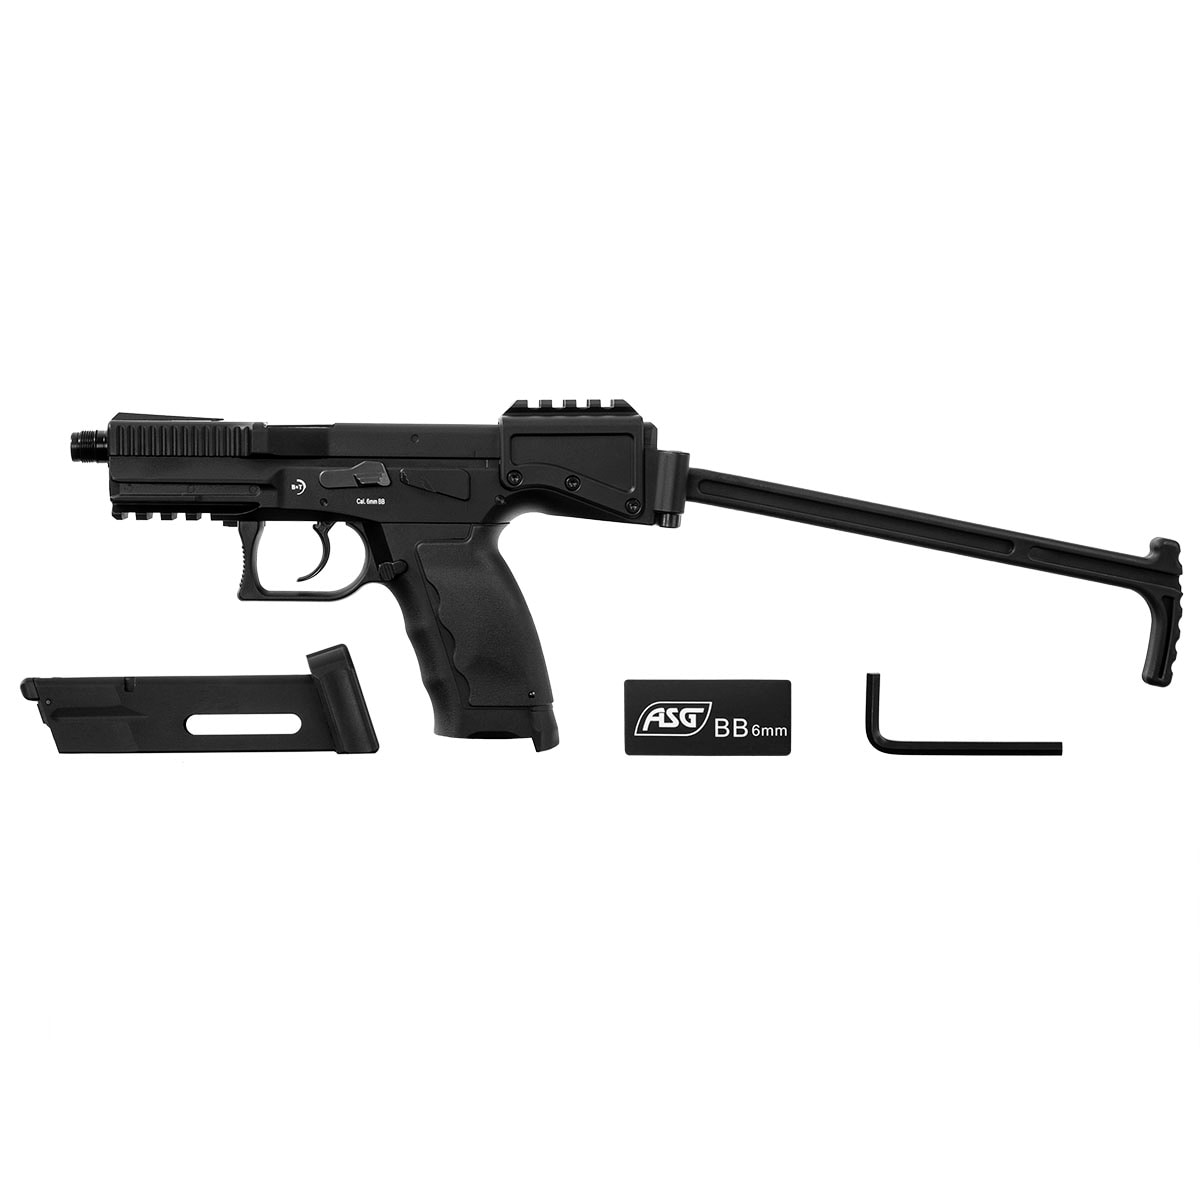 Pistolet GBB B&T USW-A1 CO2 - czarny